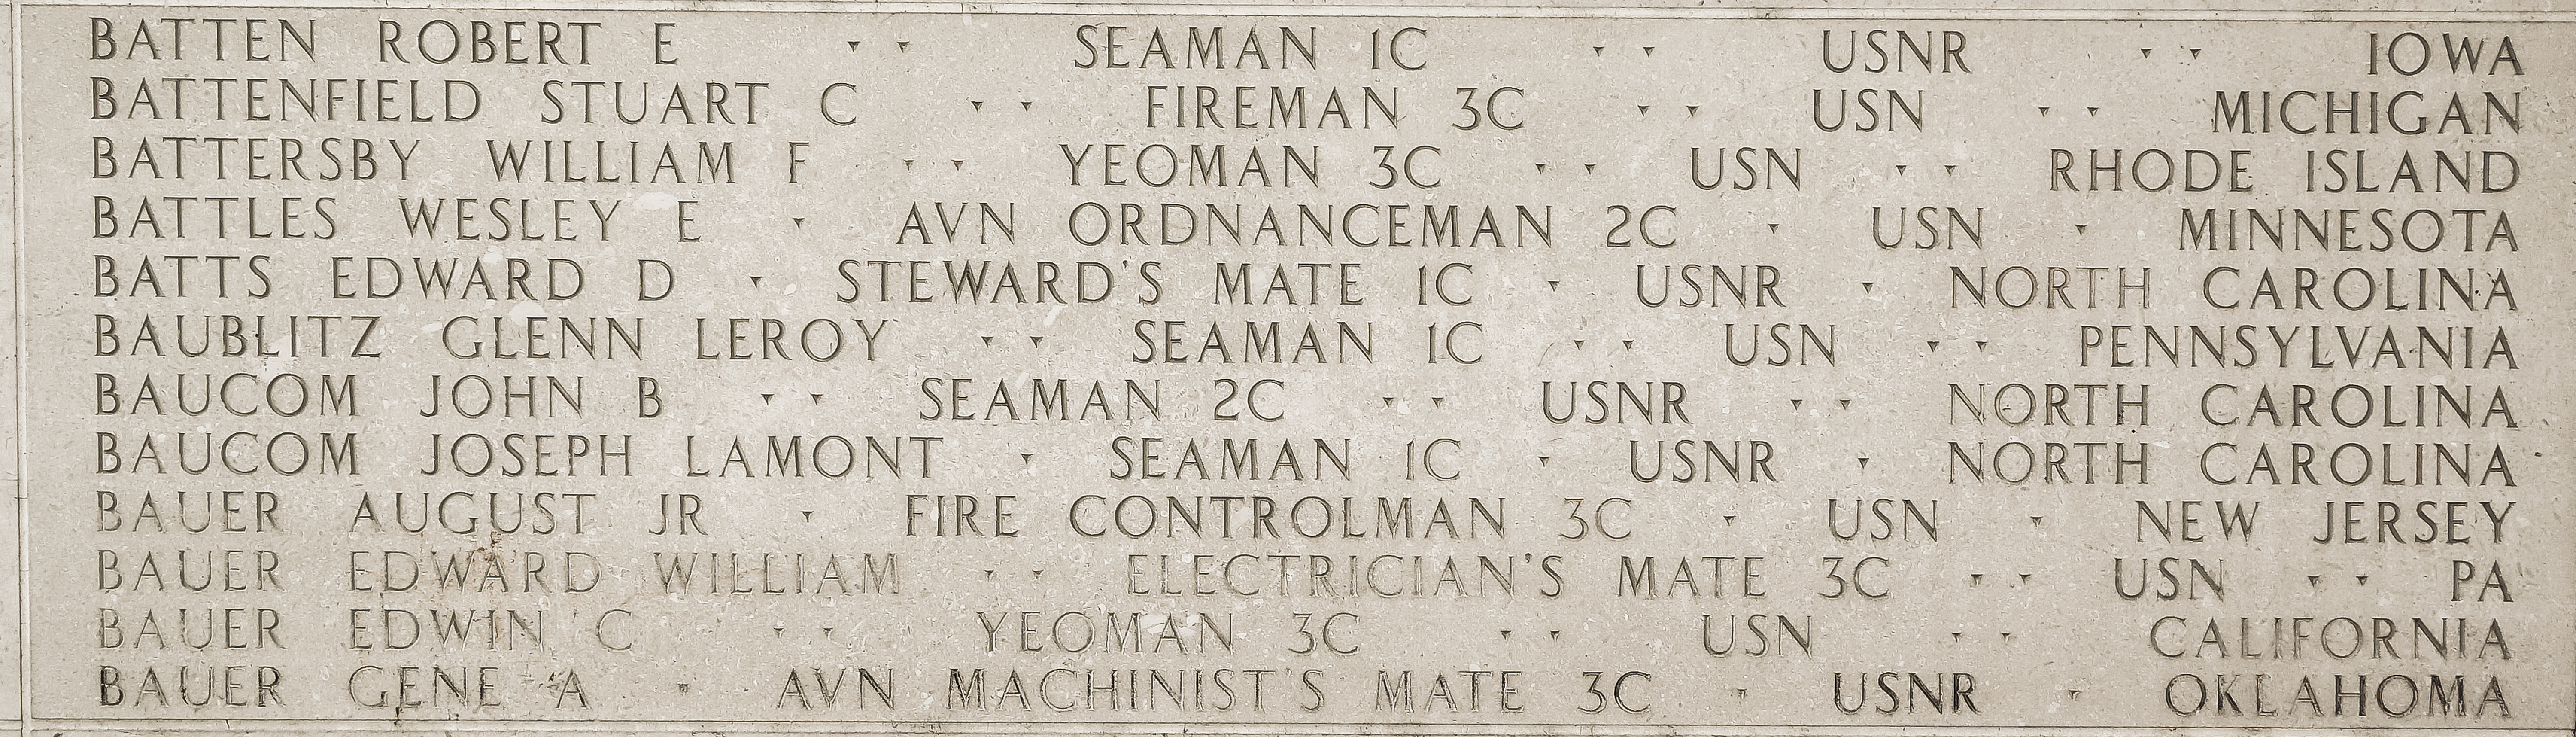 Edward William Bauer, Electrician's Mate Third Class